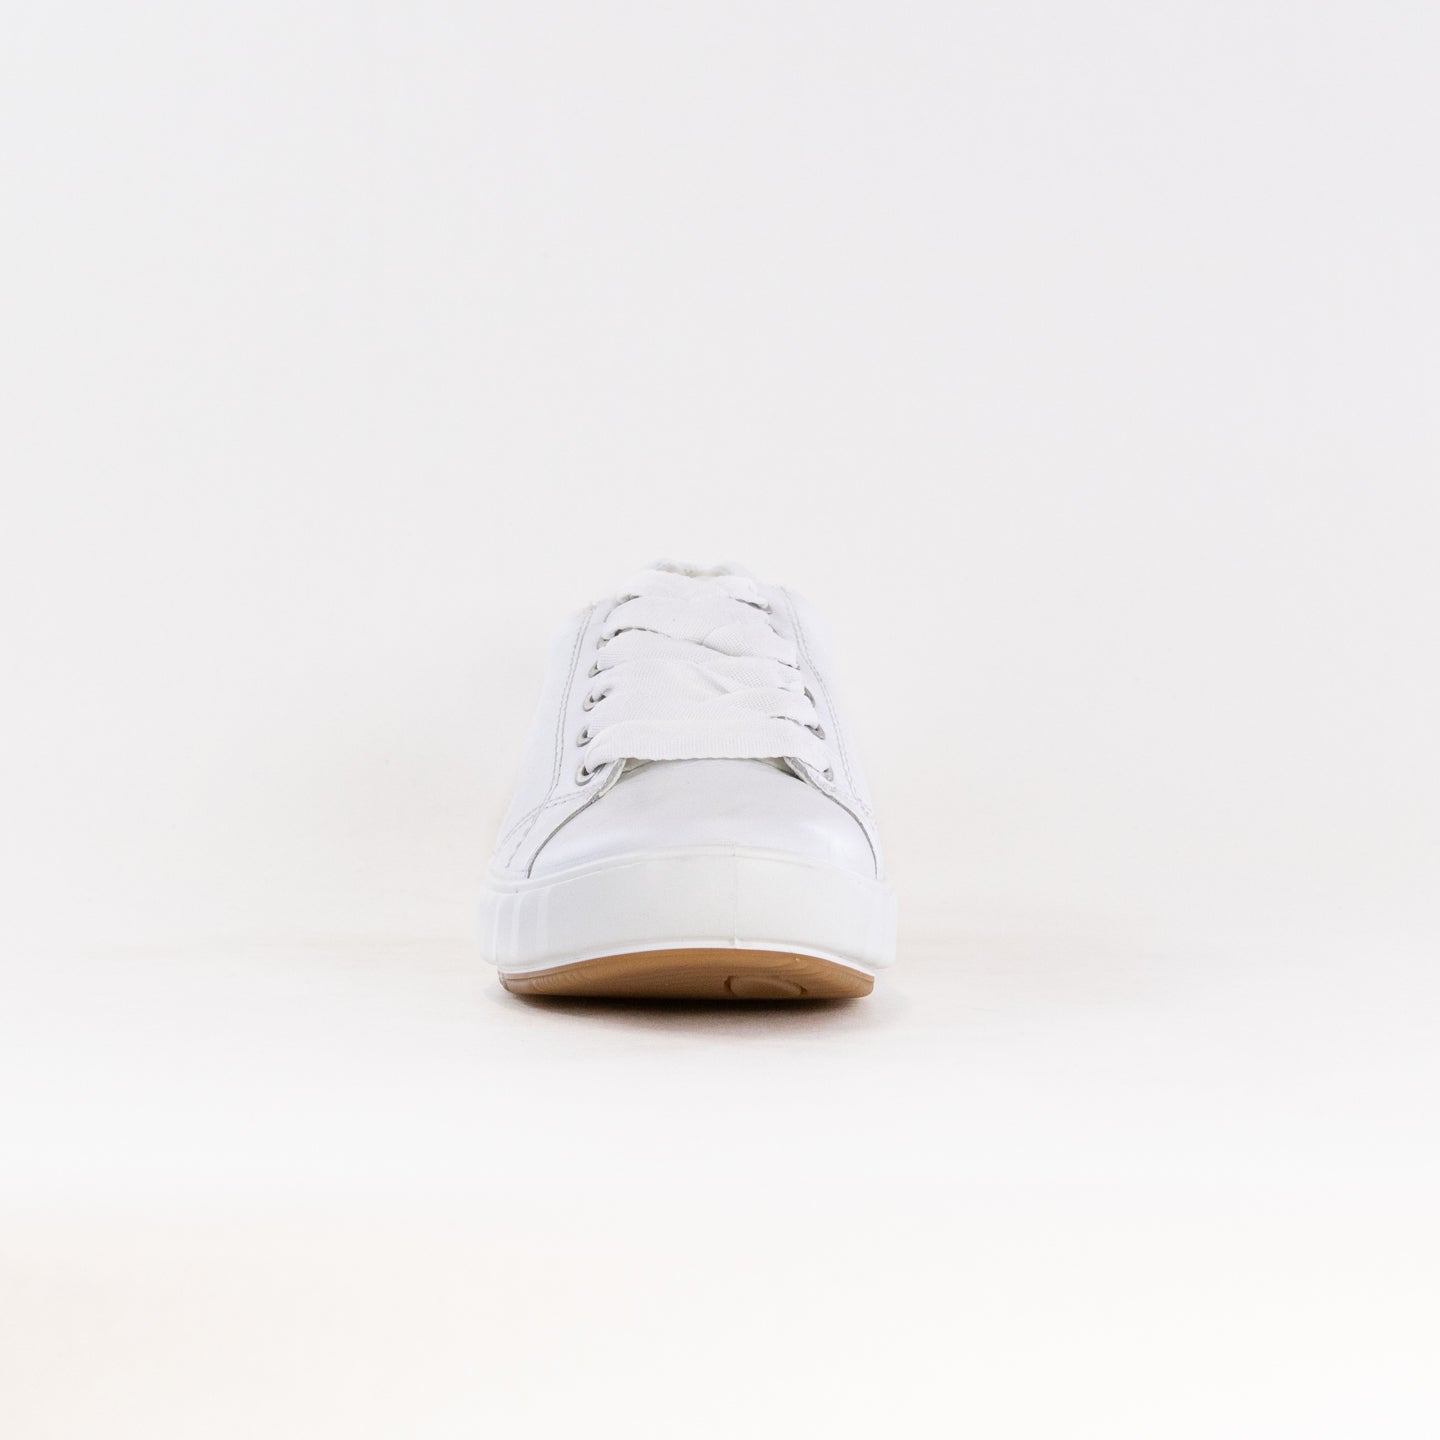 Ara Alexandria Lace Up Sneaker (Women's) - White Leather